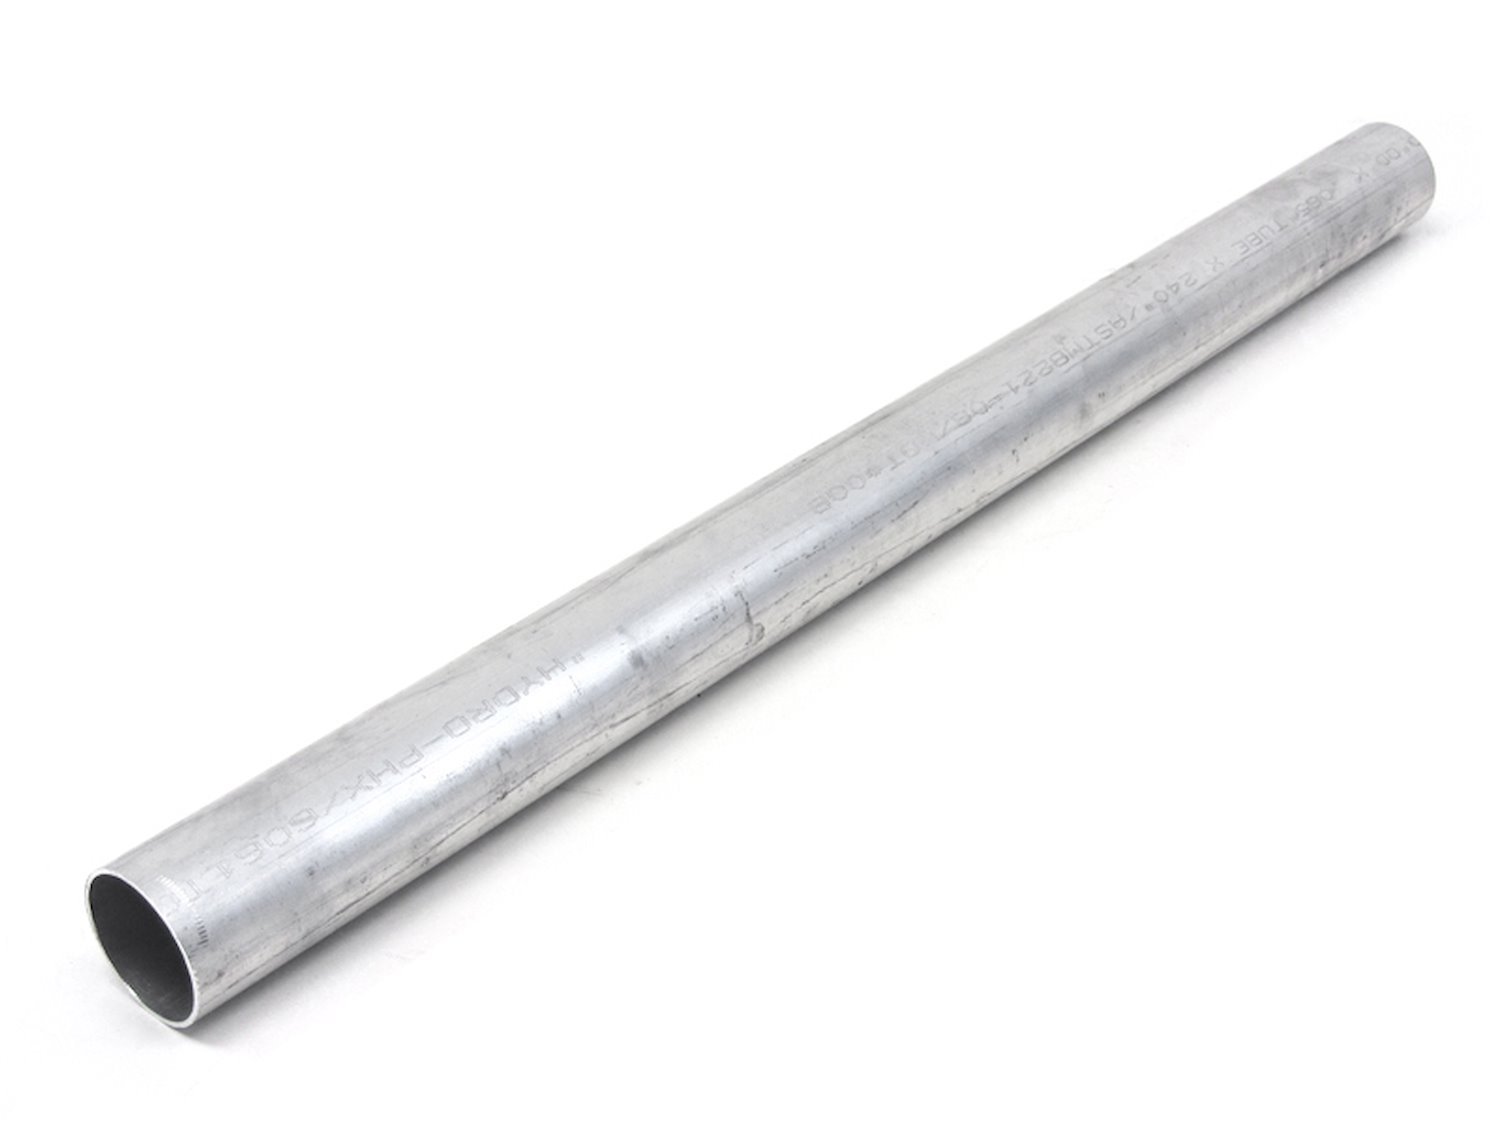 AST-2F-238 Aluminum Tubing, 6061 Aluminum, Straight Tubing, 2-3/8 in. OD, Seamless, Raw Finish, 2 ft. Long